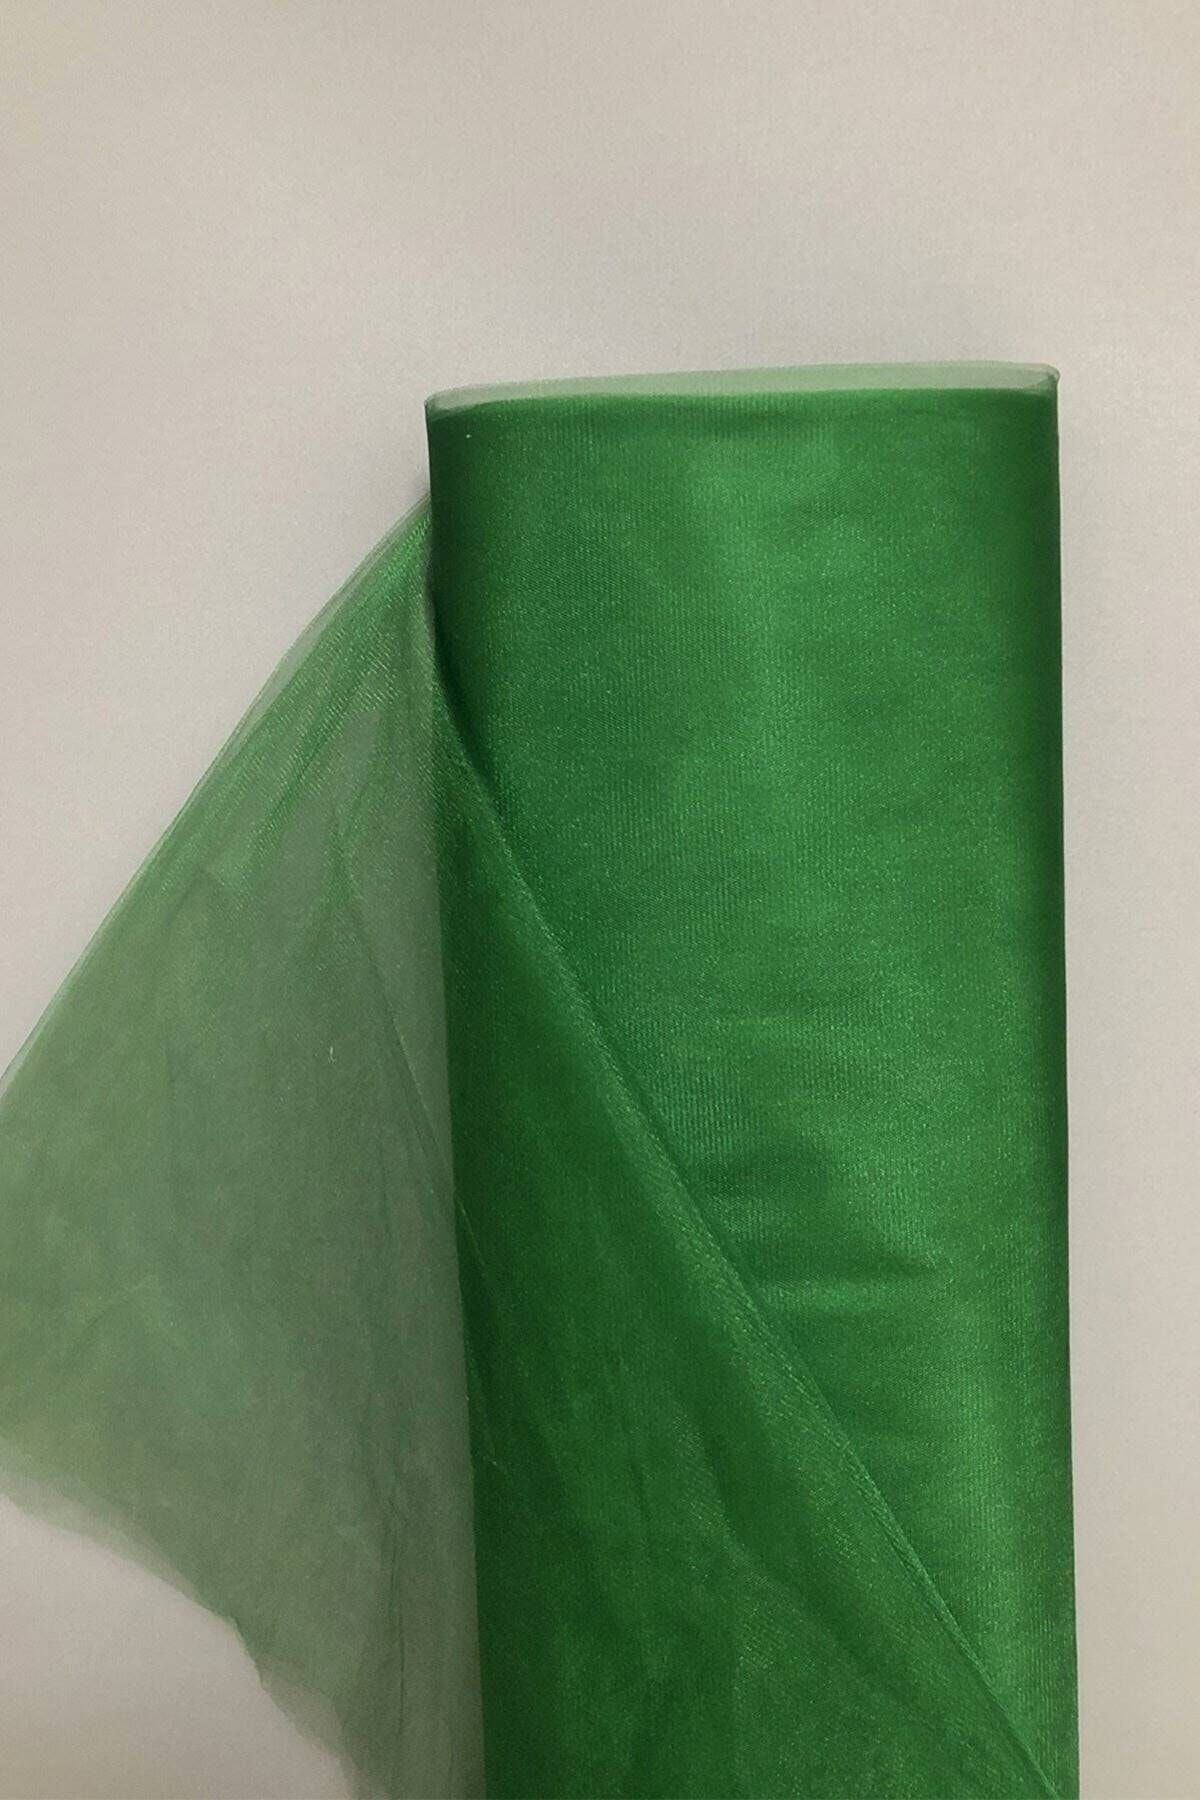 Hobigram Çimen Yeşil Kristal Tül 5 Metre